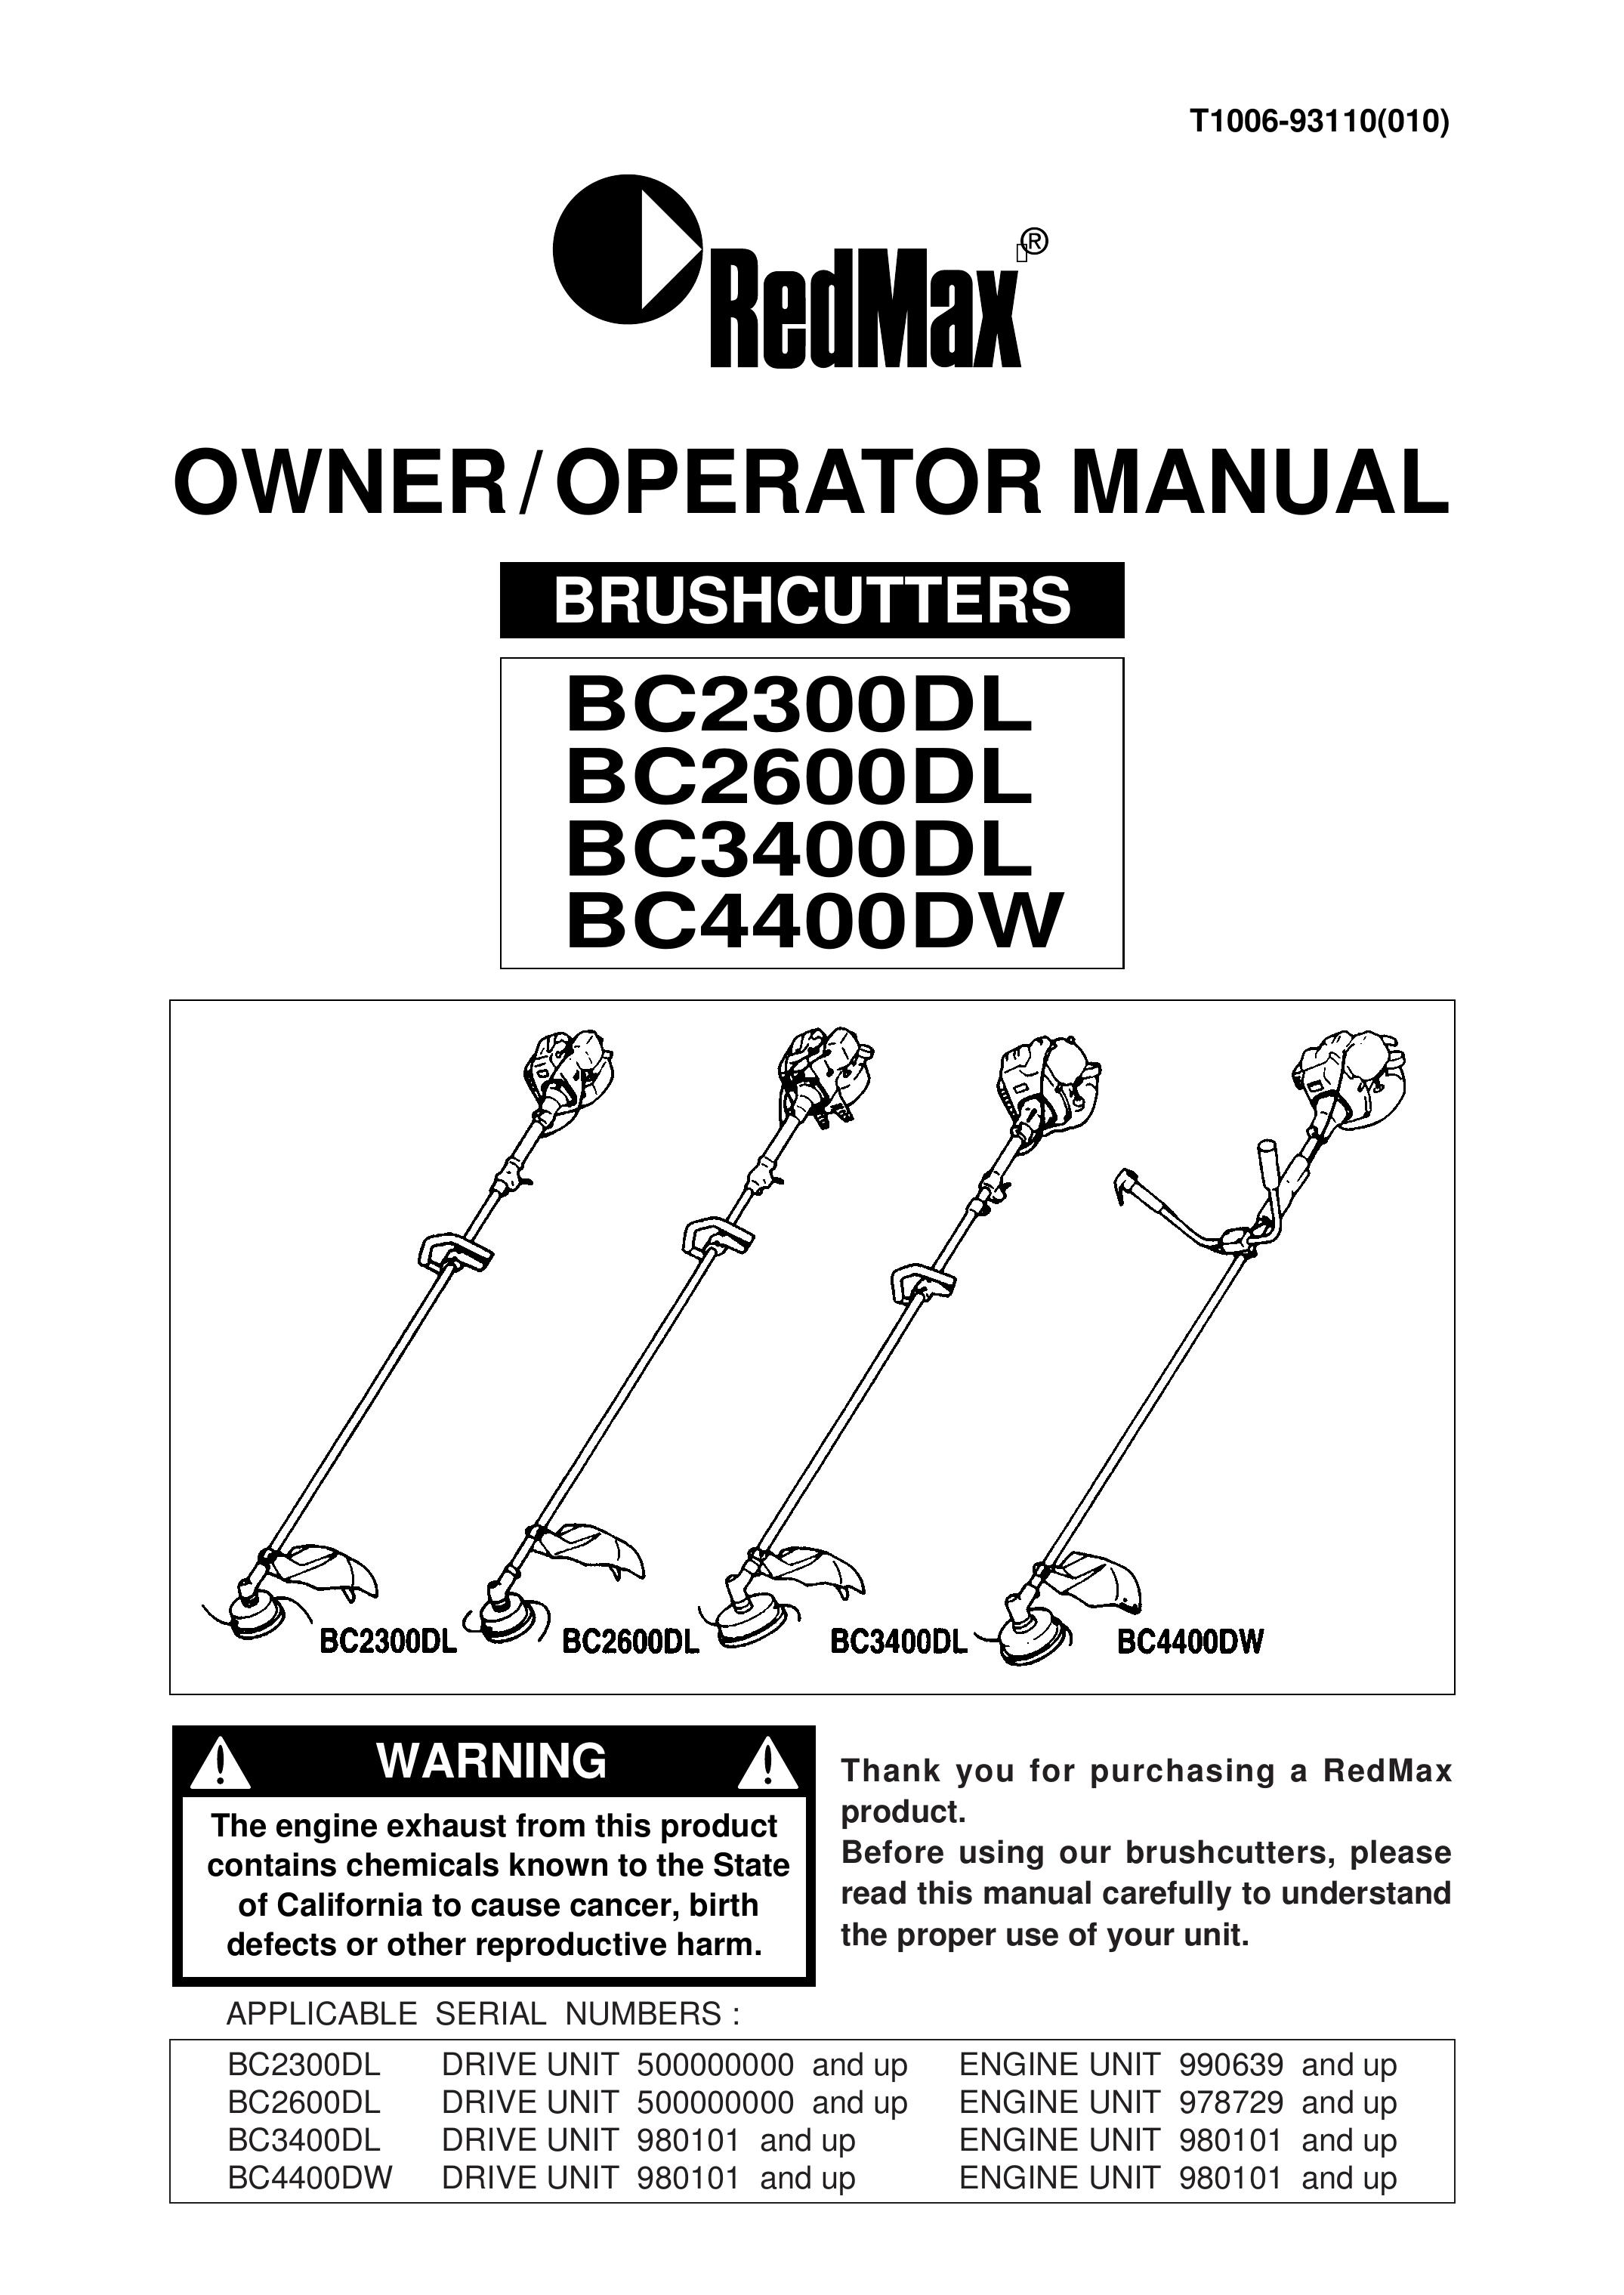 RedMax BC2300DL Brush Cutter User Manual